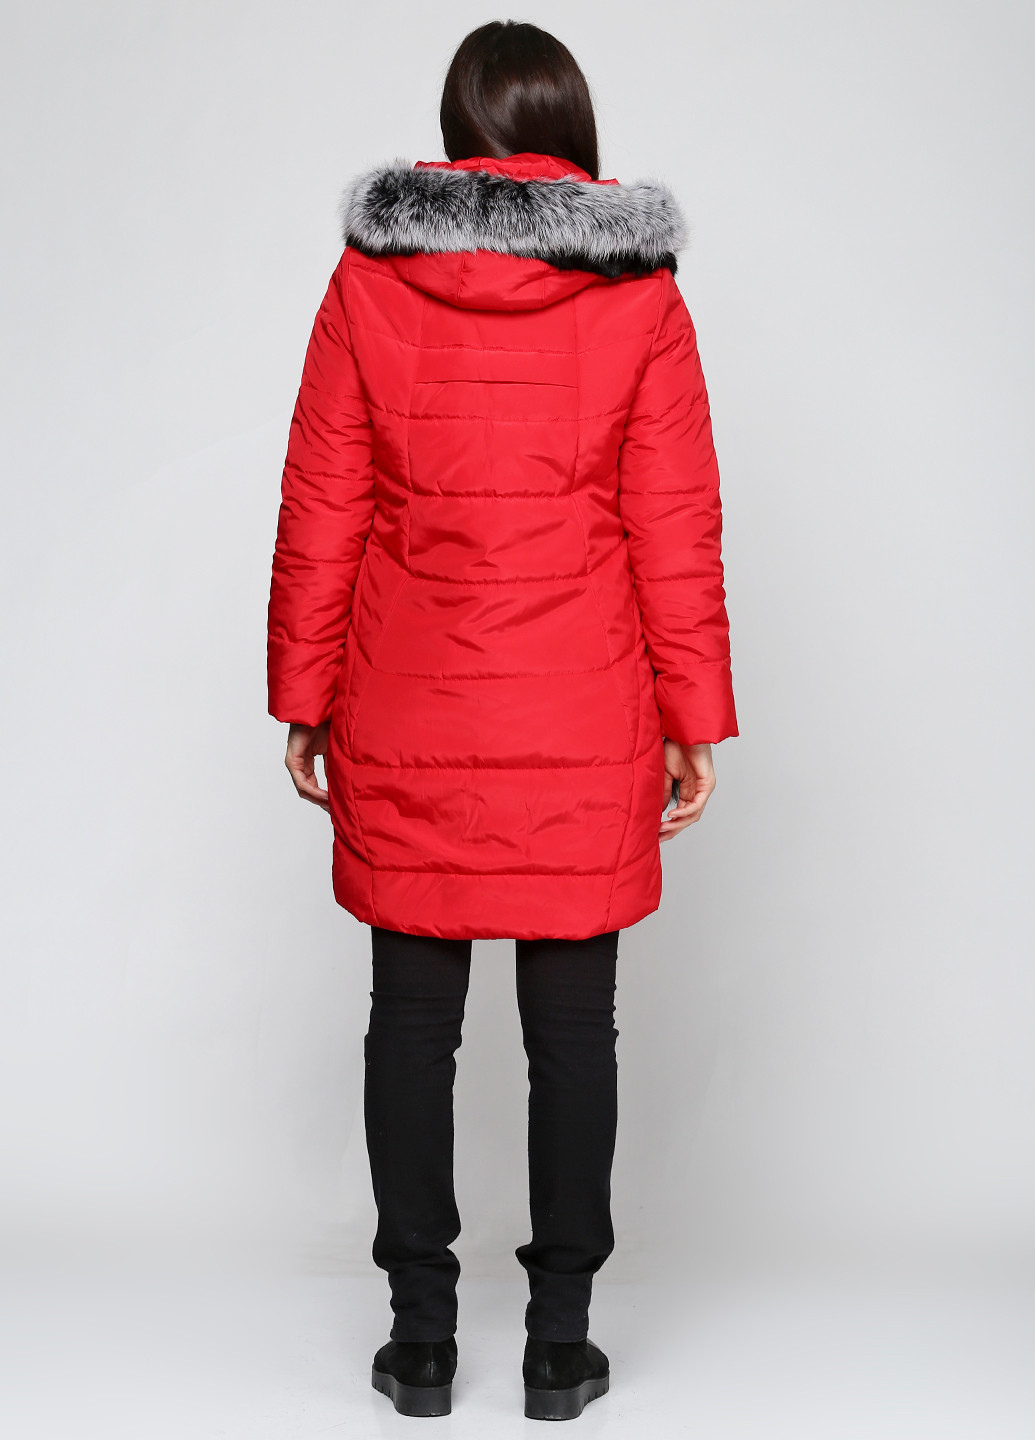 Красная зимняя куртка Aranda